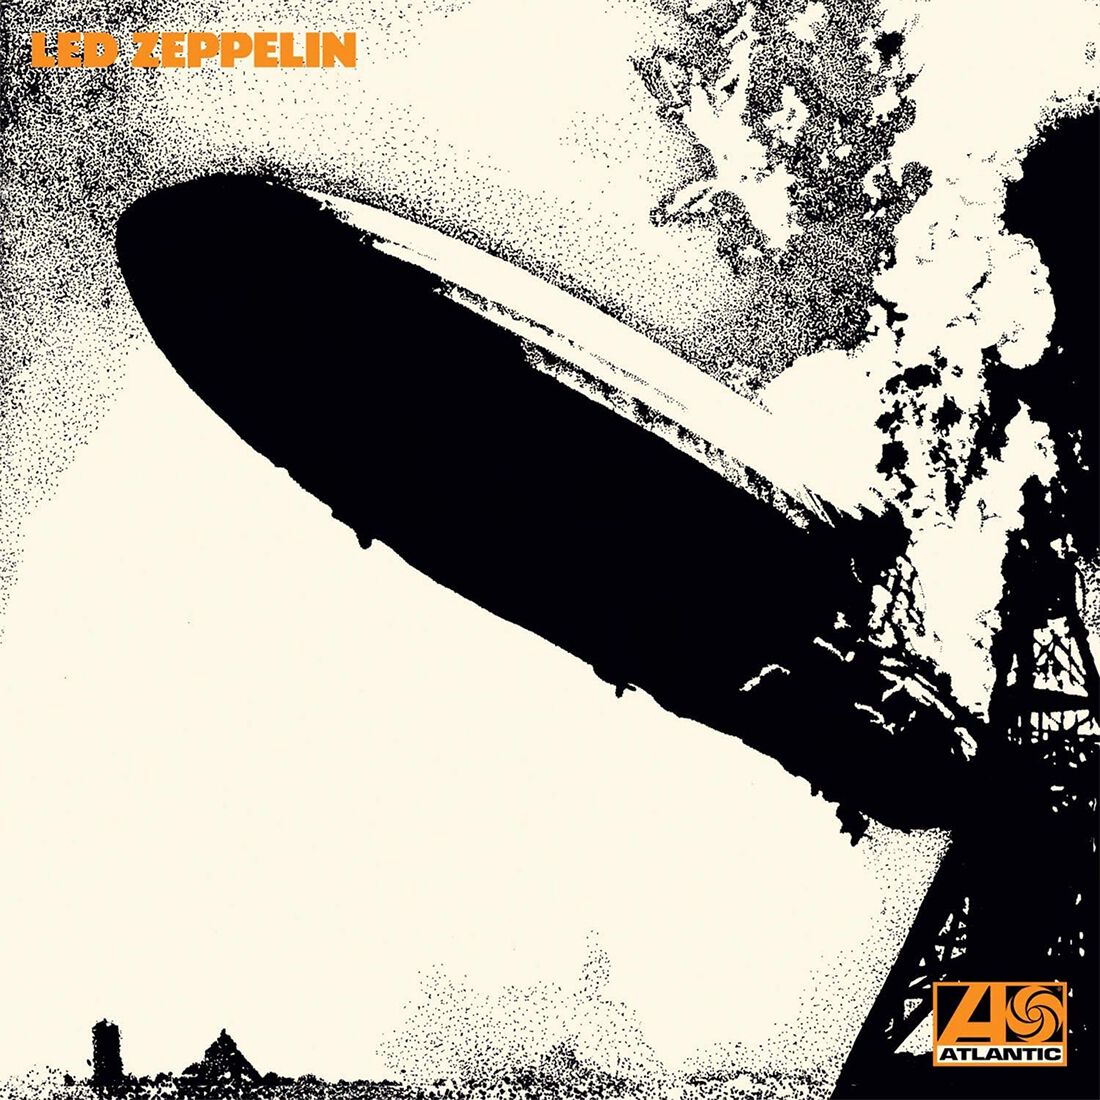 Led Zeppelin - Official Website